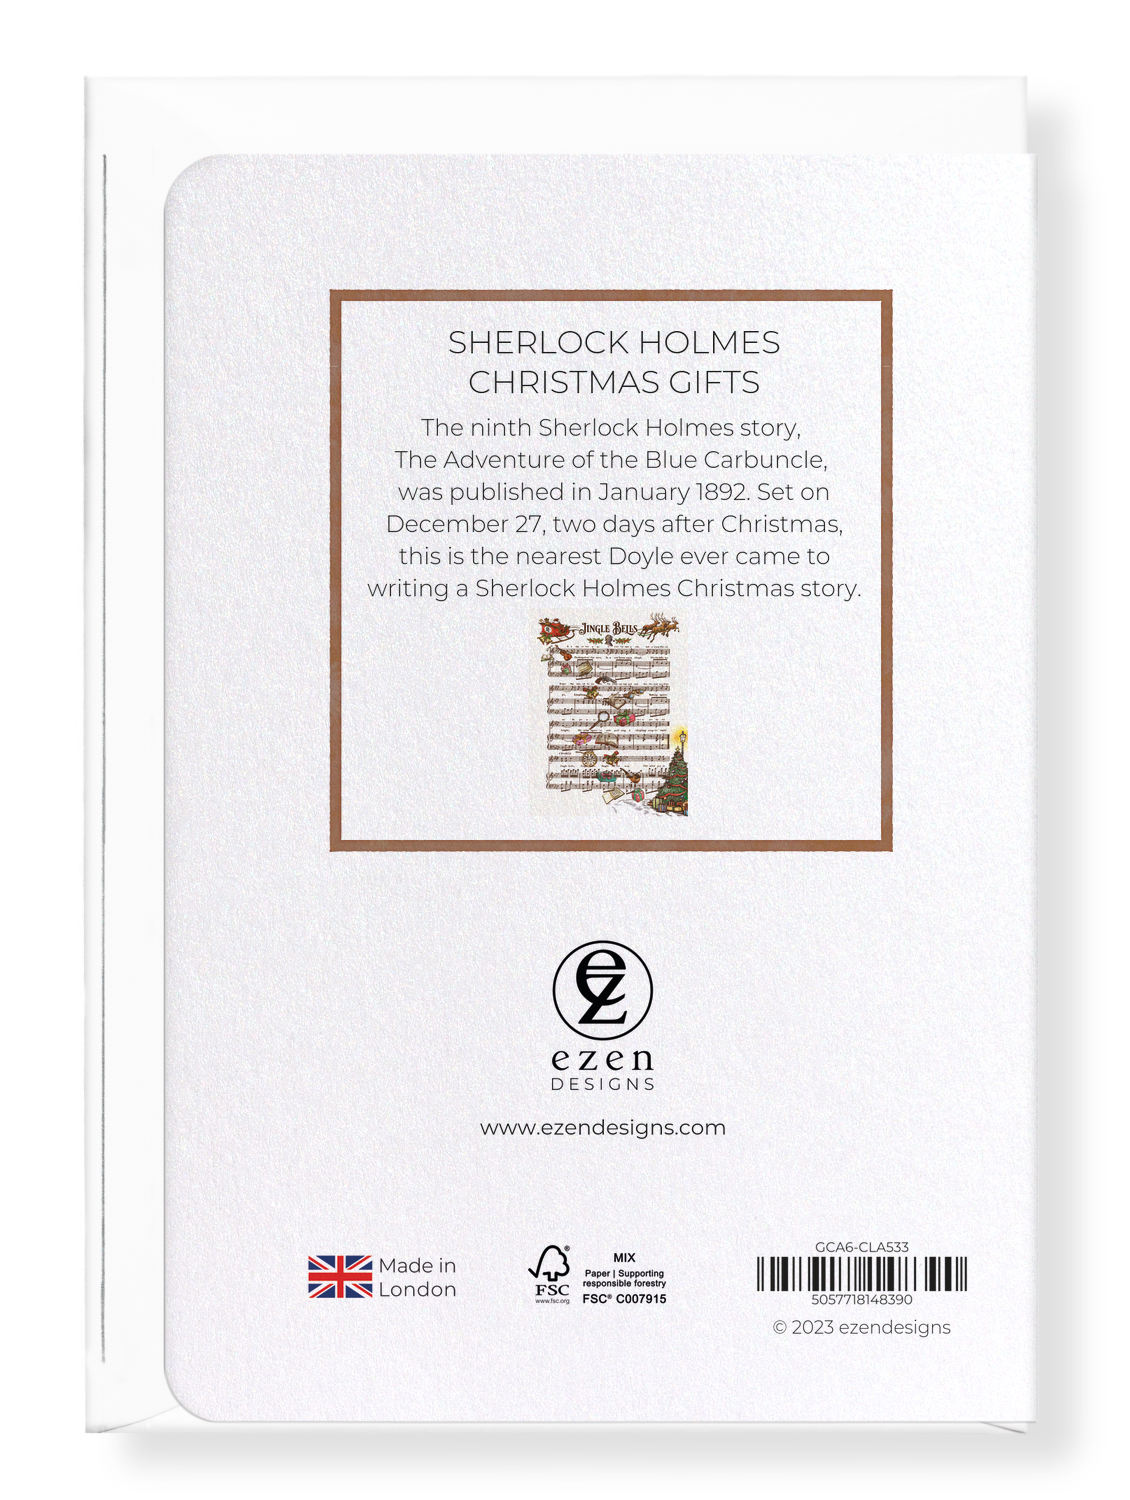 Ezen Designs - Sherlock Holmes Christmas Gifts - Greeting Card - Back